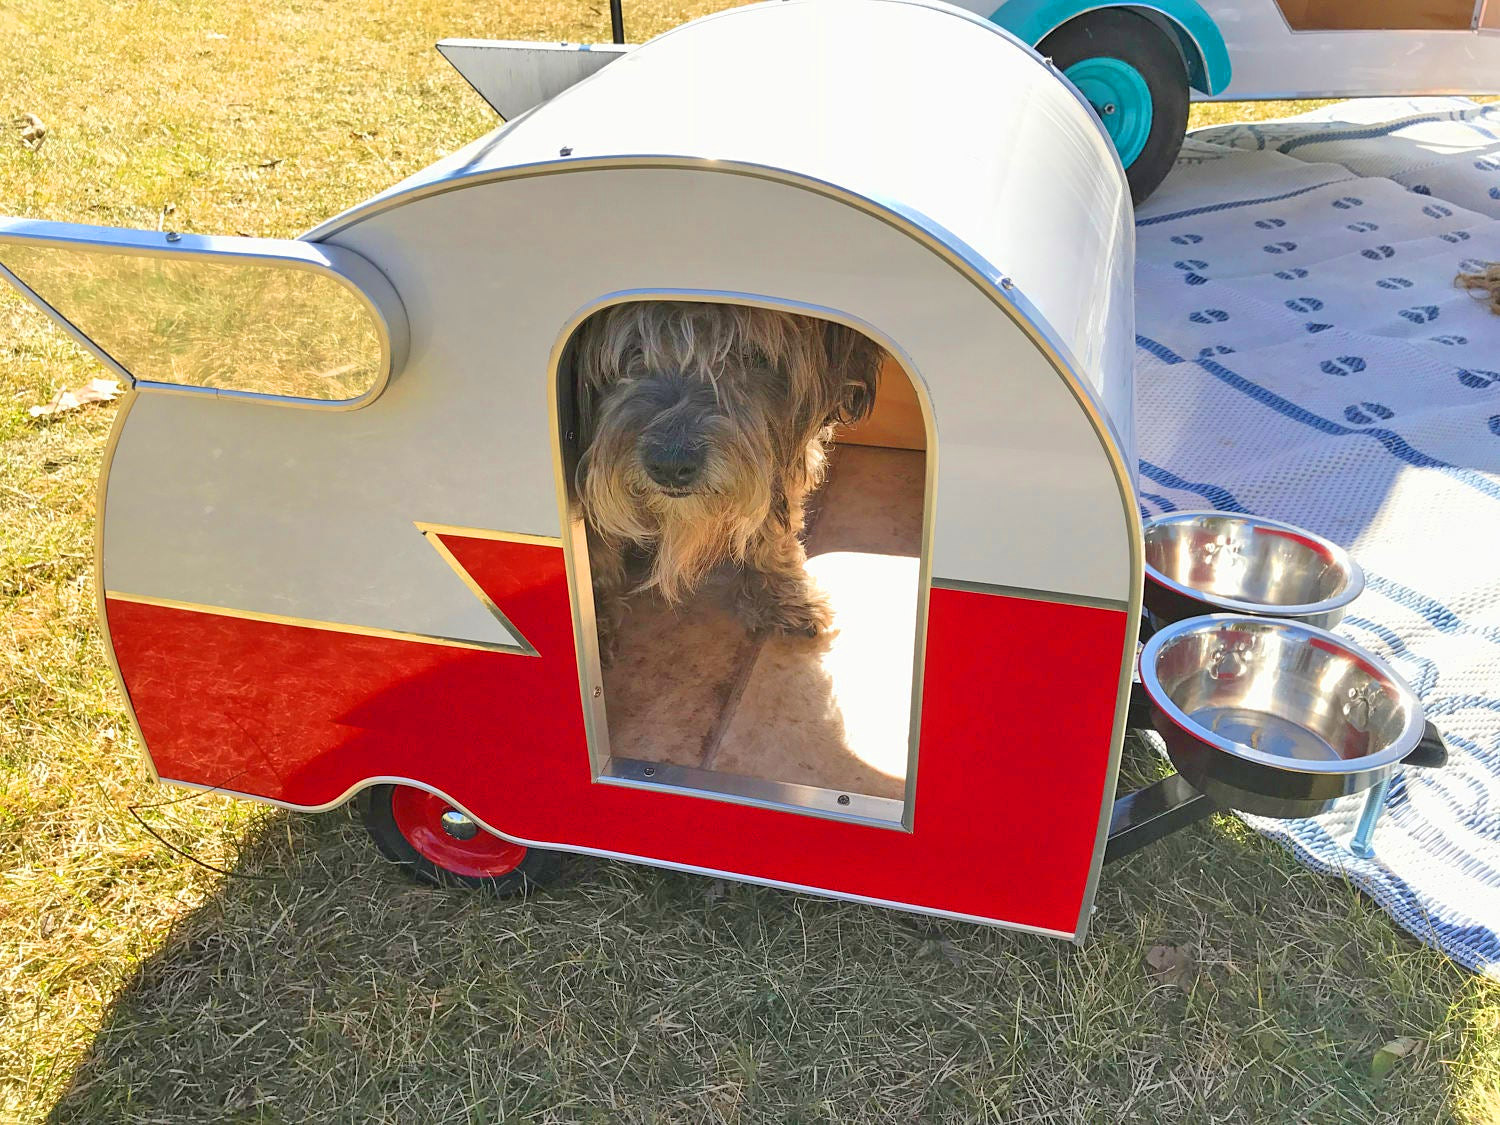 Camping Trailer Dog Beds - Canine Campers RV shaped dog beds